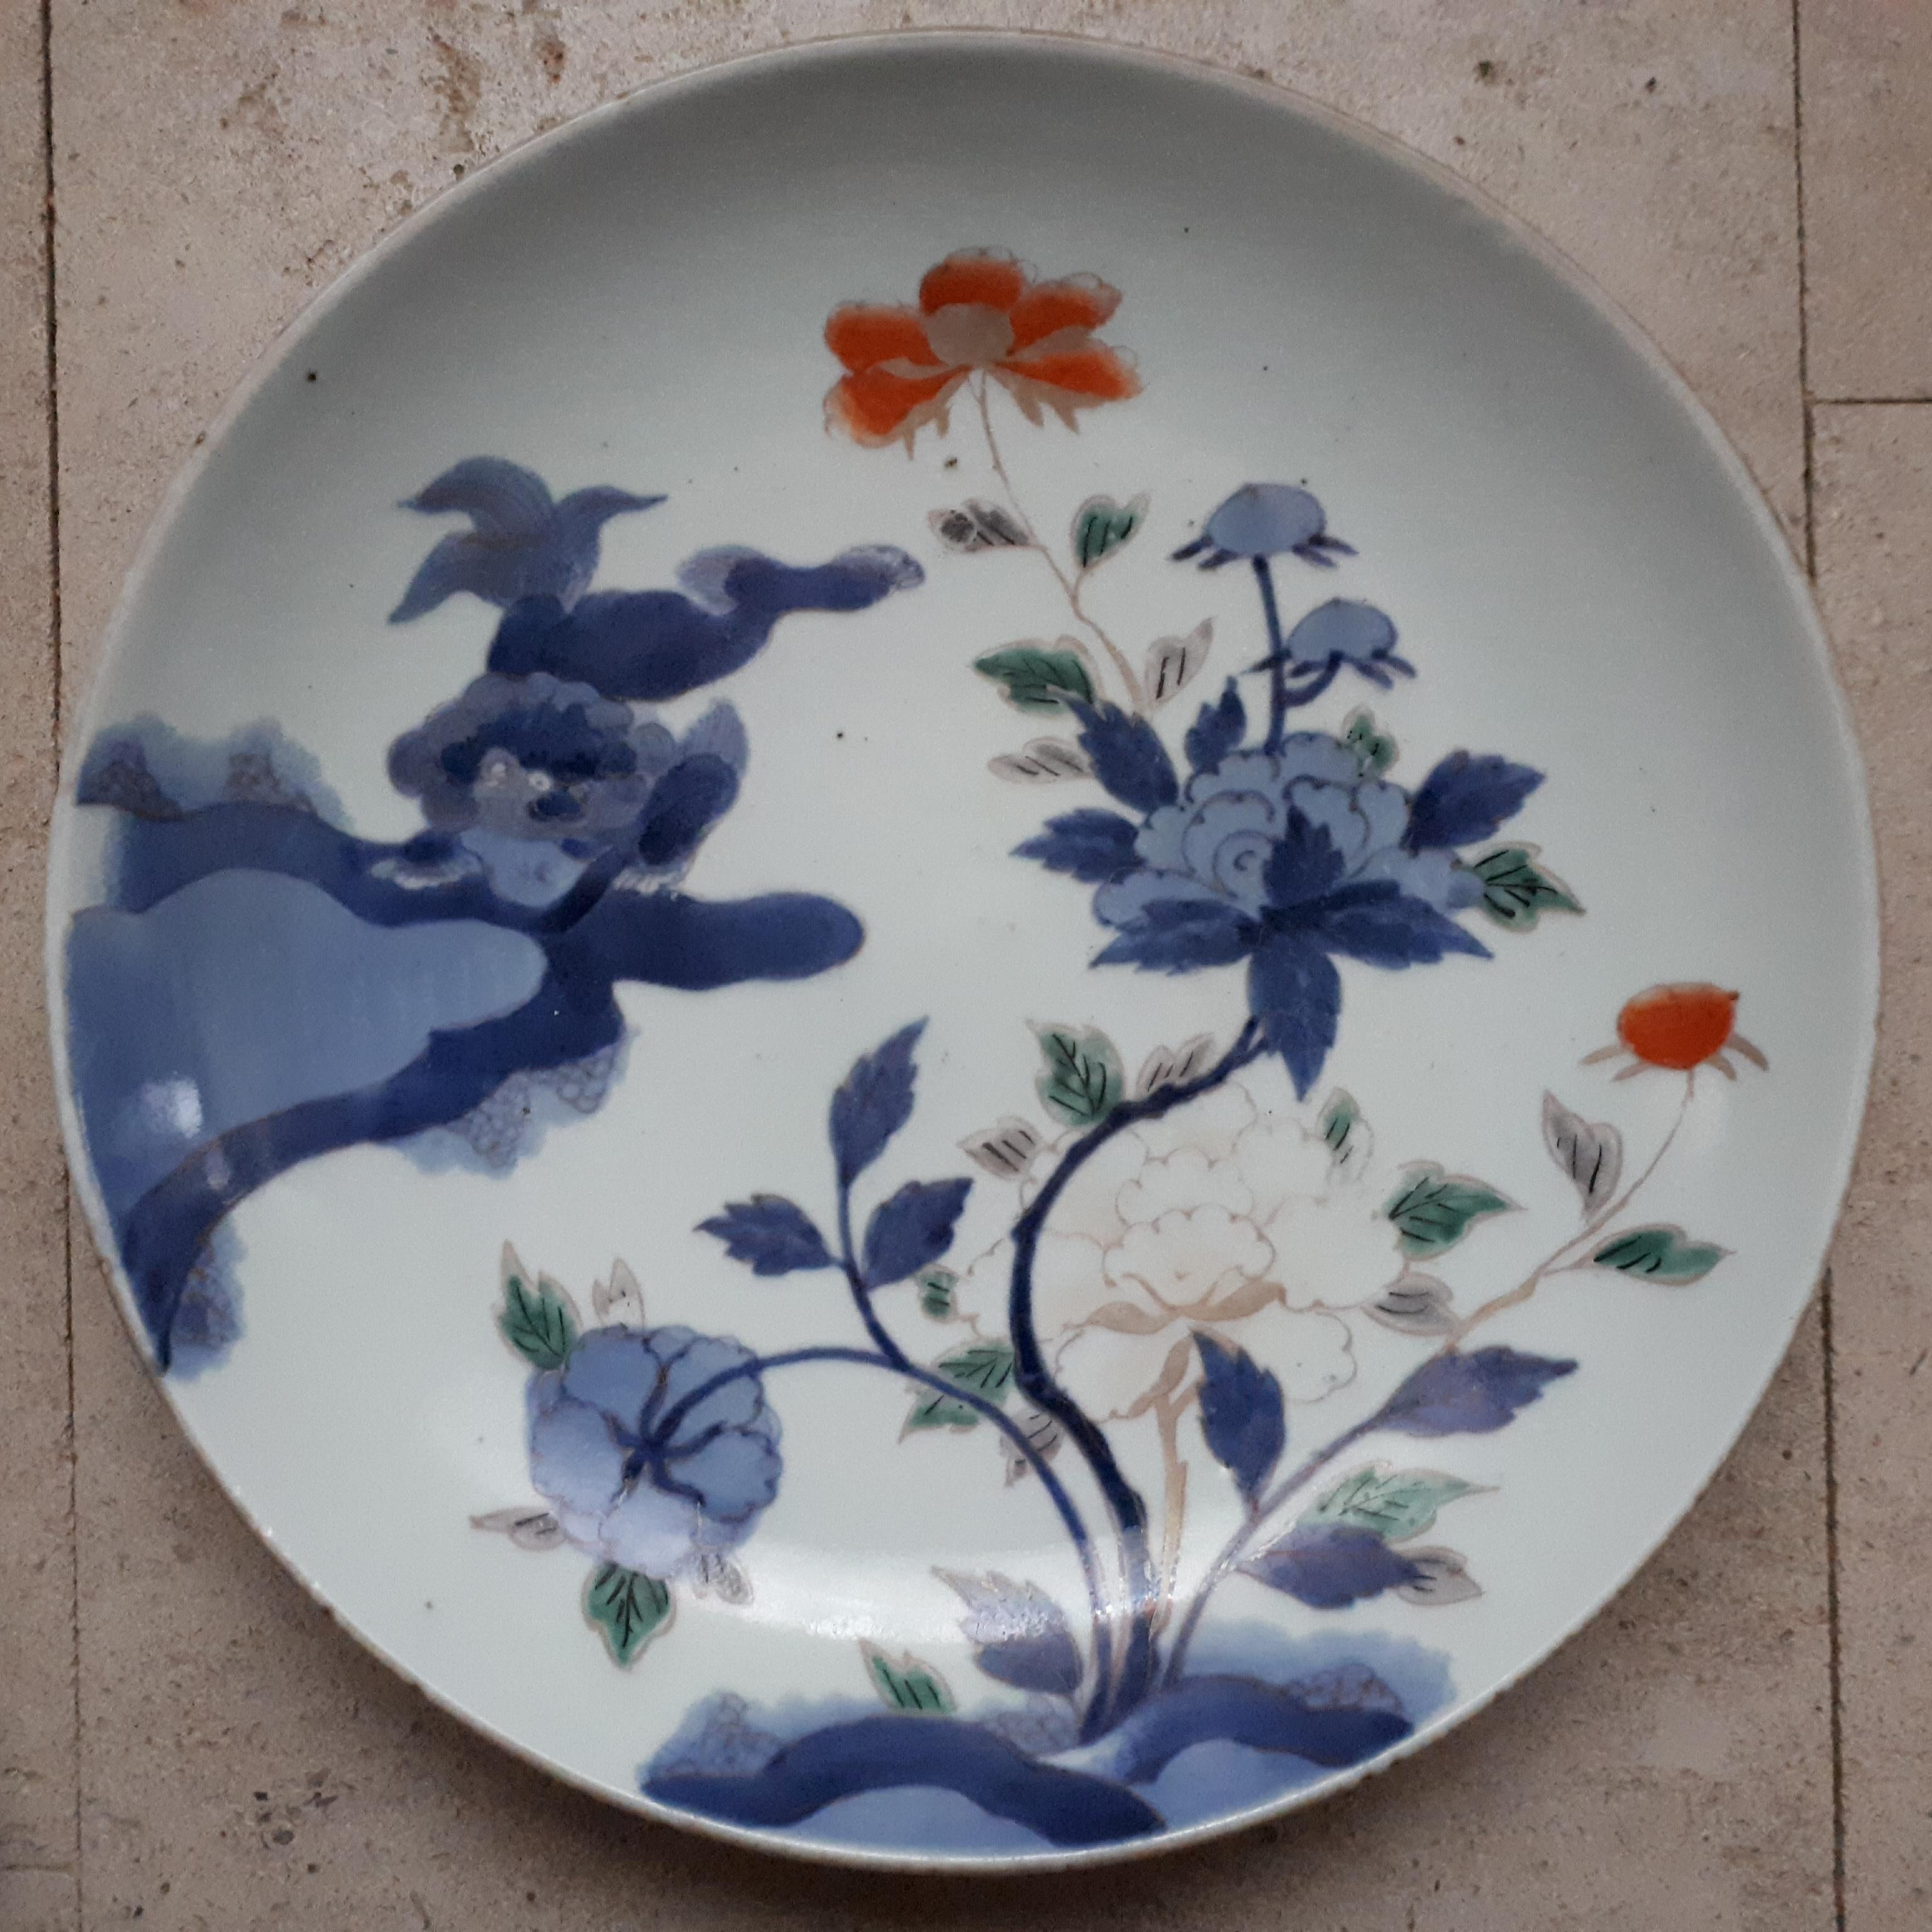 Arita porcelain dish with decoration of a shishi among peonies.
Apocryphal Chenghua mark on reverse.
Japan, 18th century
